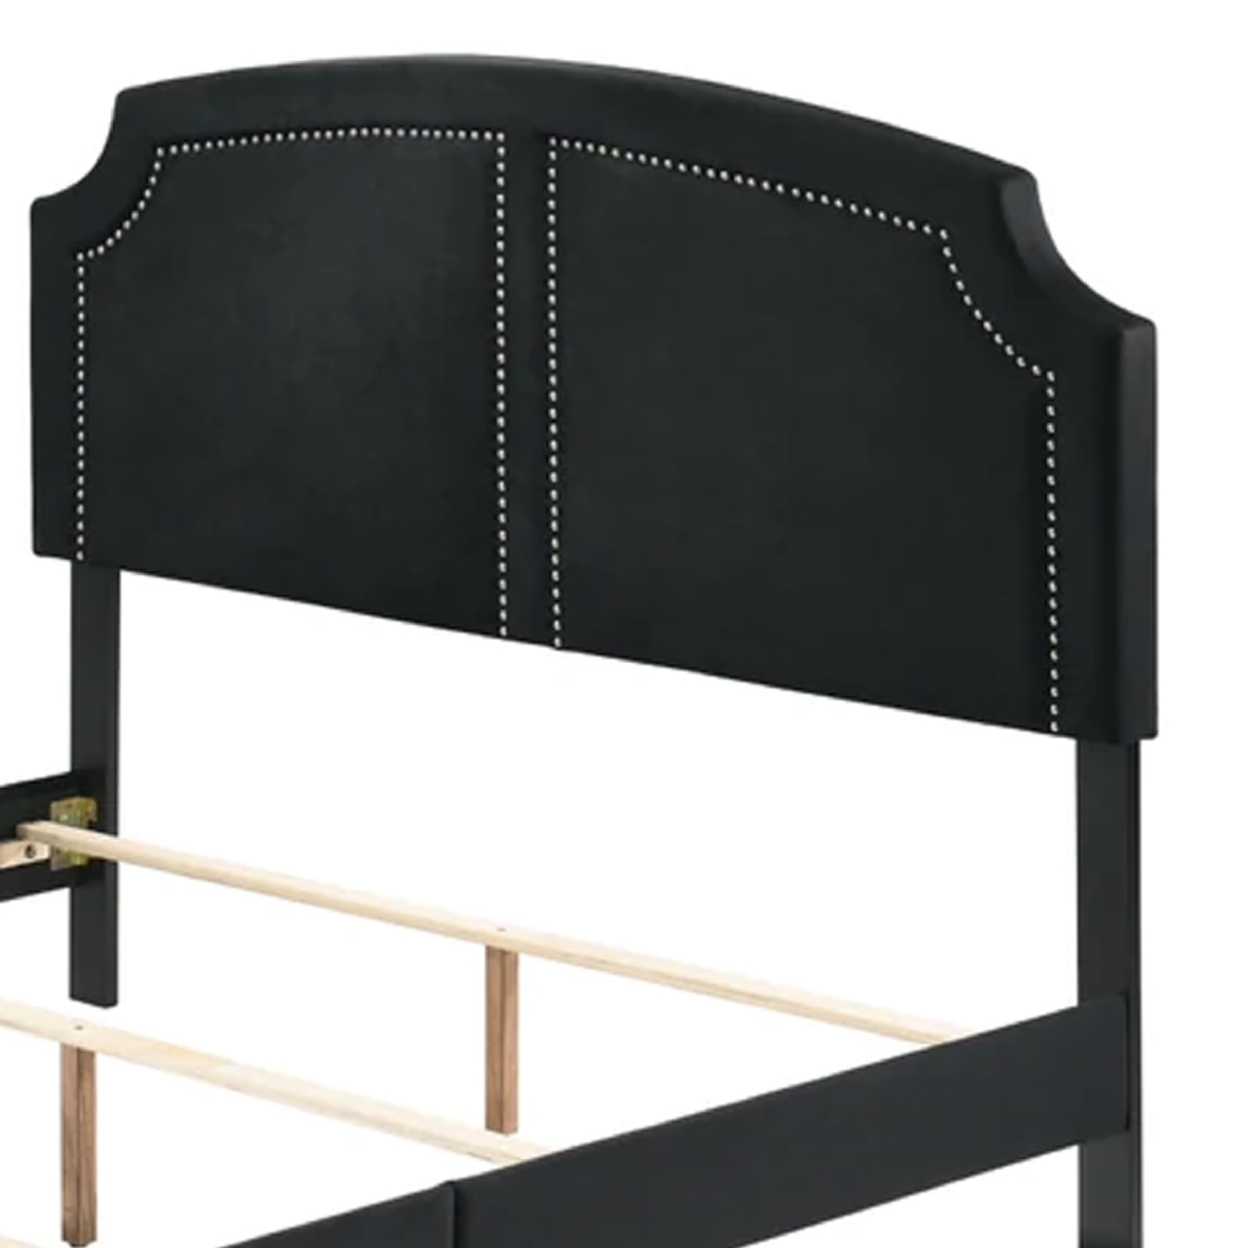 Lily Platform Queen Upholstered Bed, Padded Headboard, Black, Gold- Saltoro Sherpi